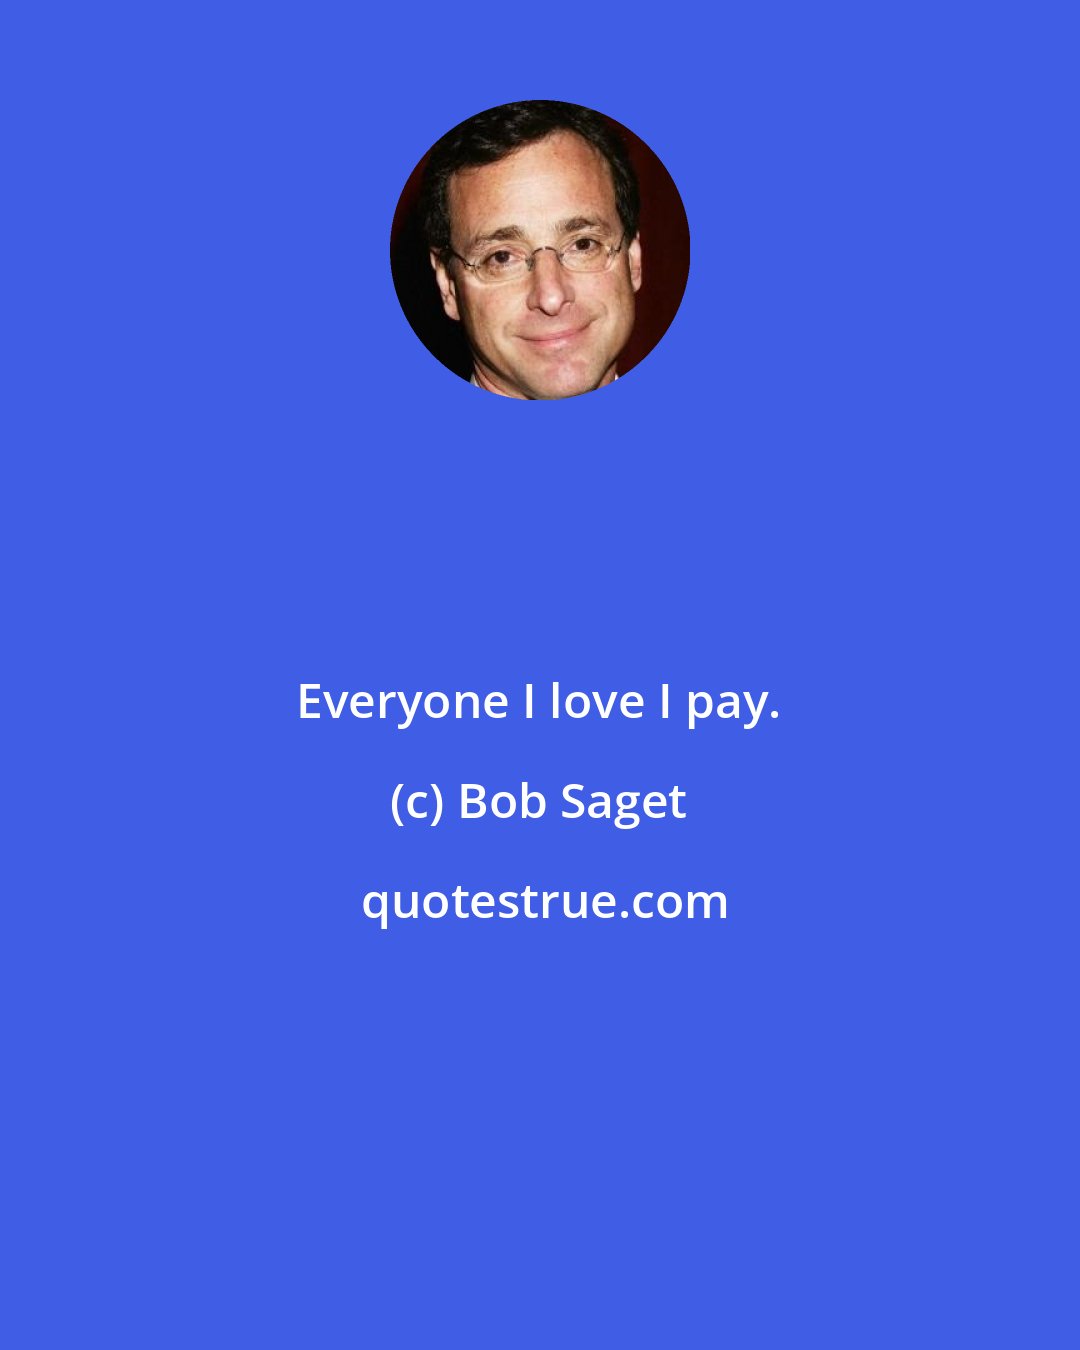 Bob Saget: Everyone I love I pay.